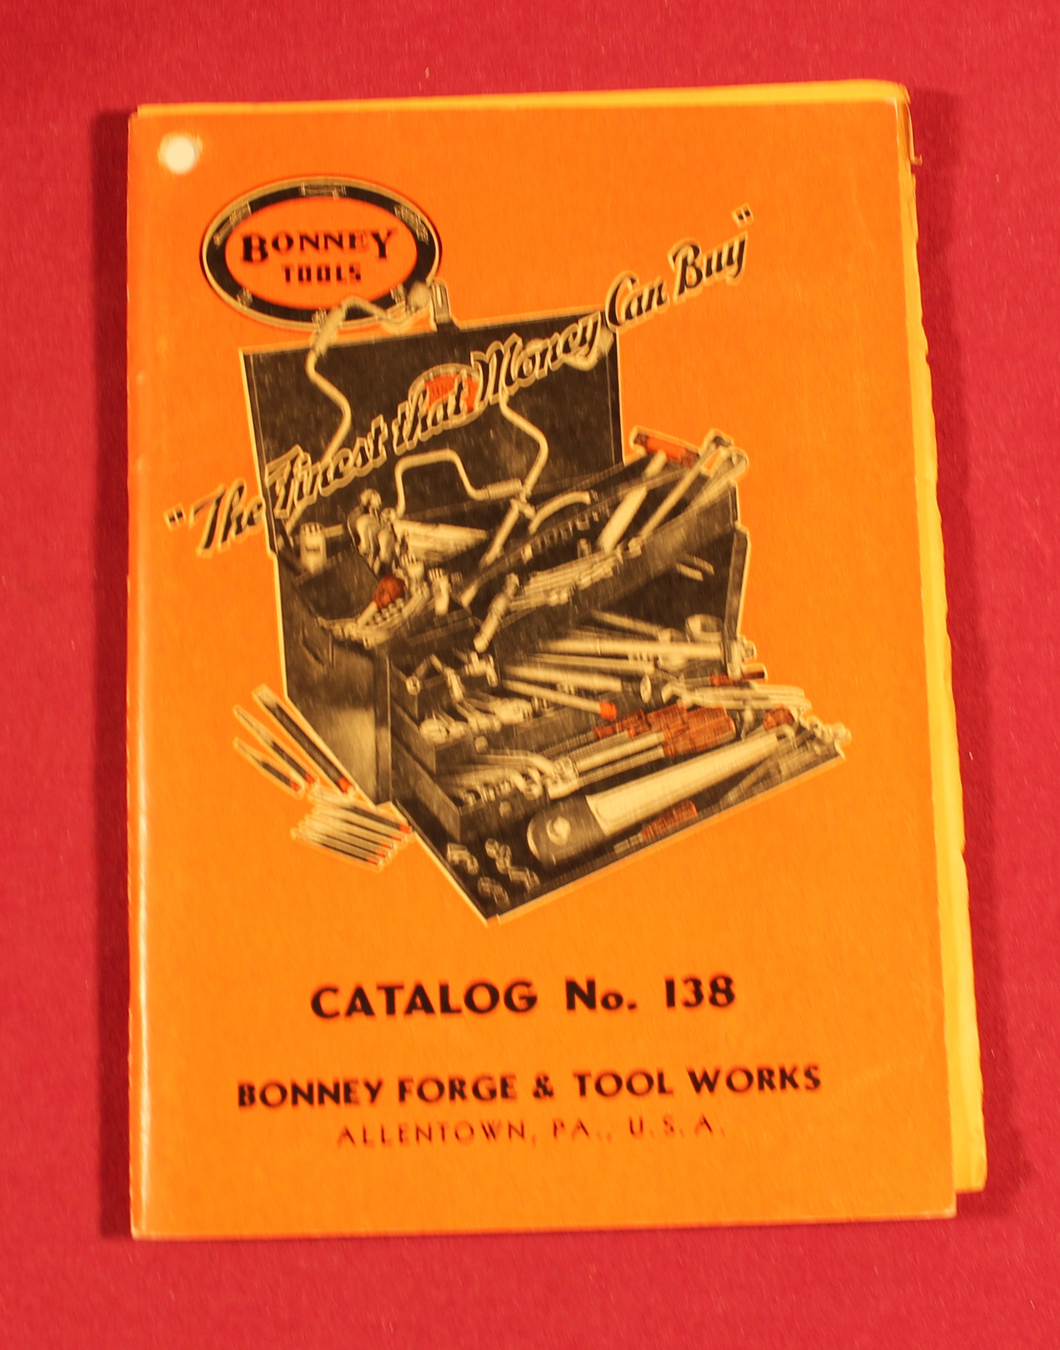 Vintage & Original 1938 Bonney Tools Catalog No. 138 With Price List